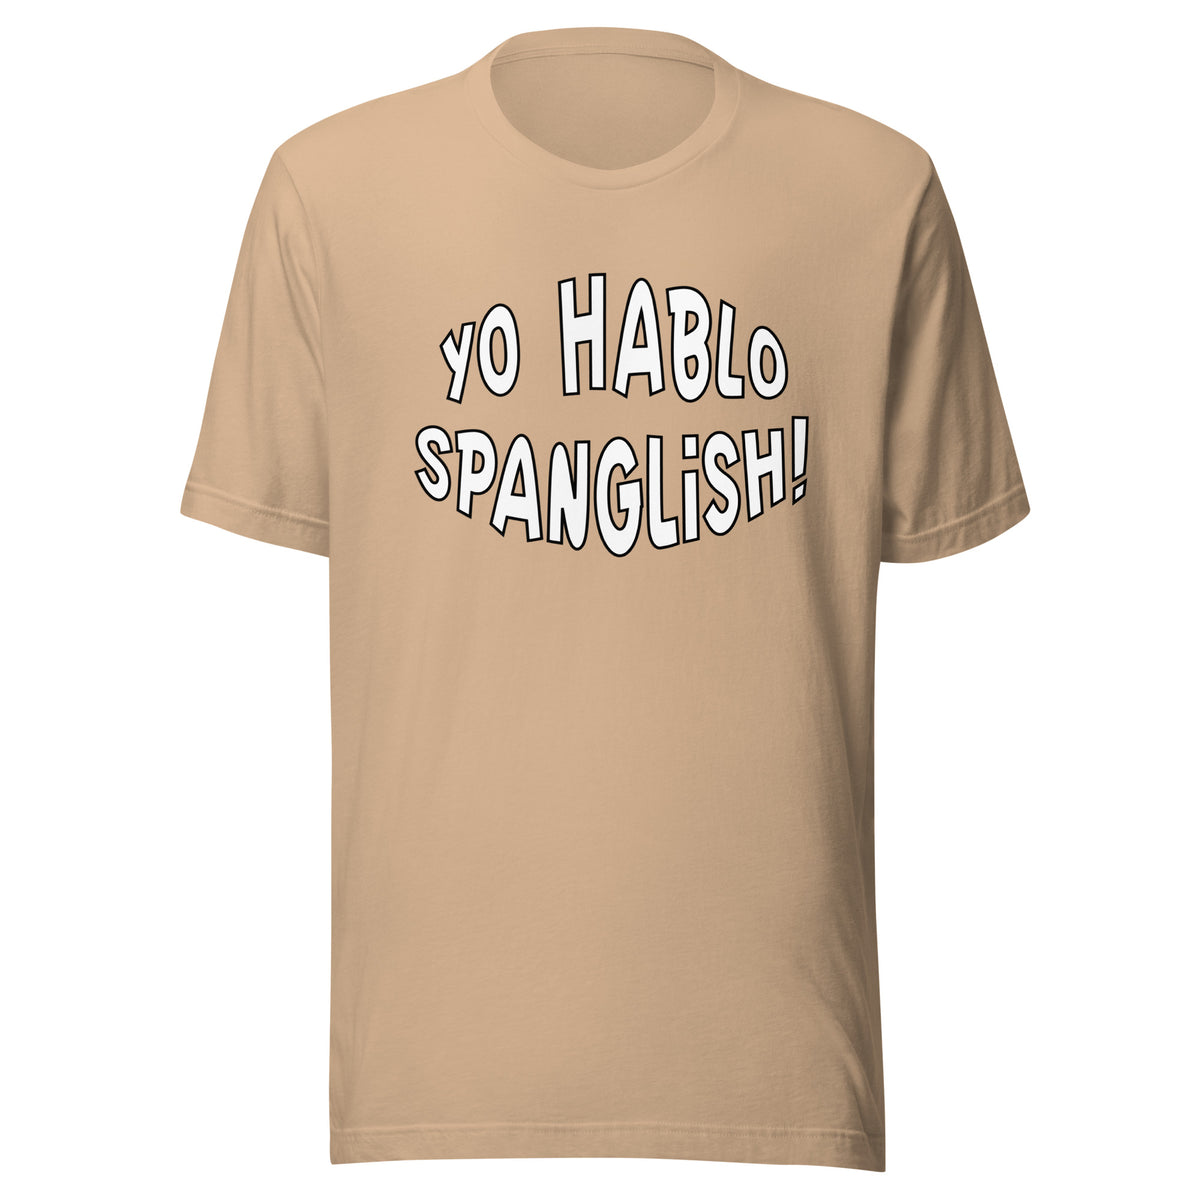 Hablo Spanglish T-shirt